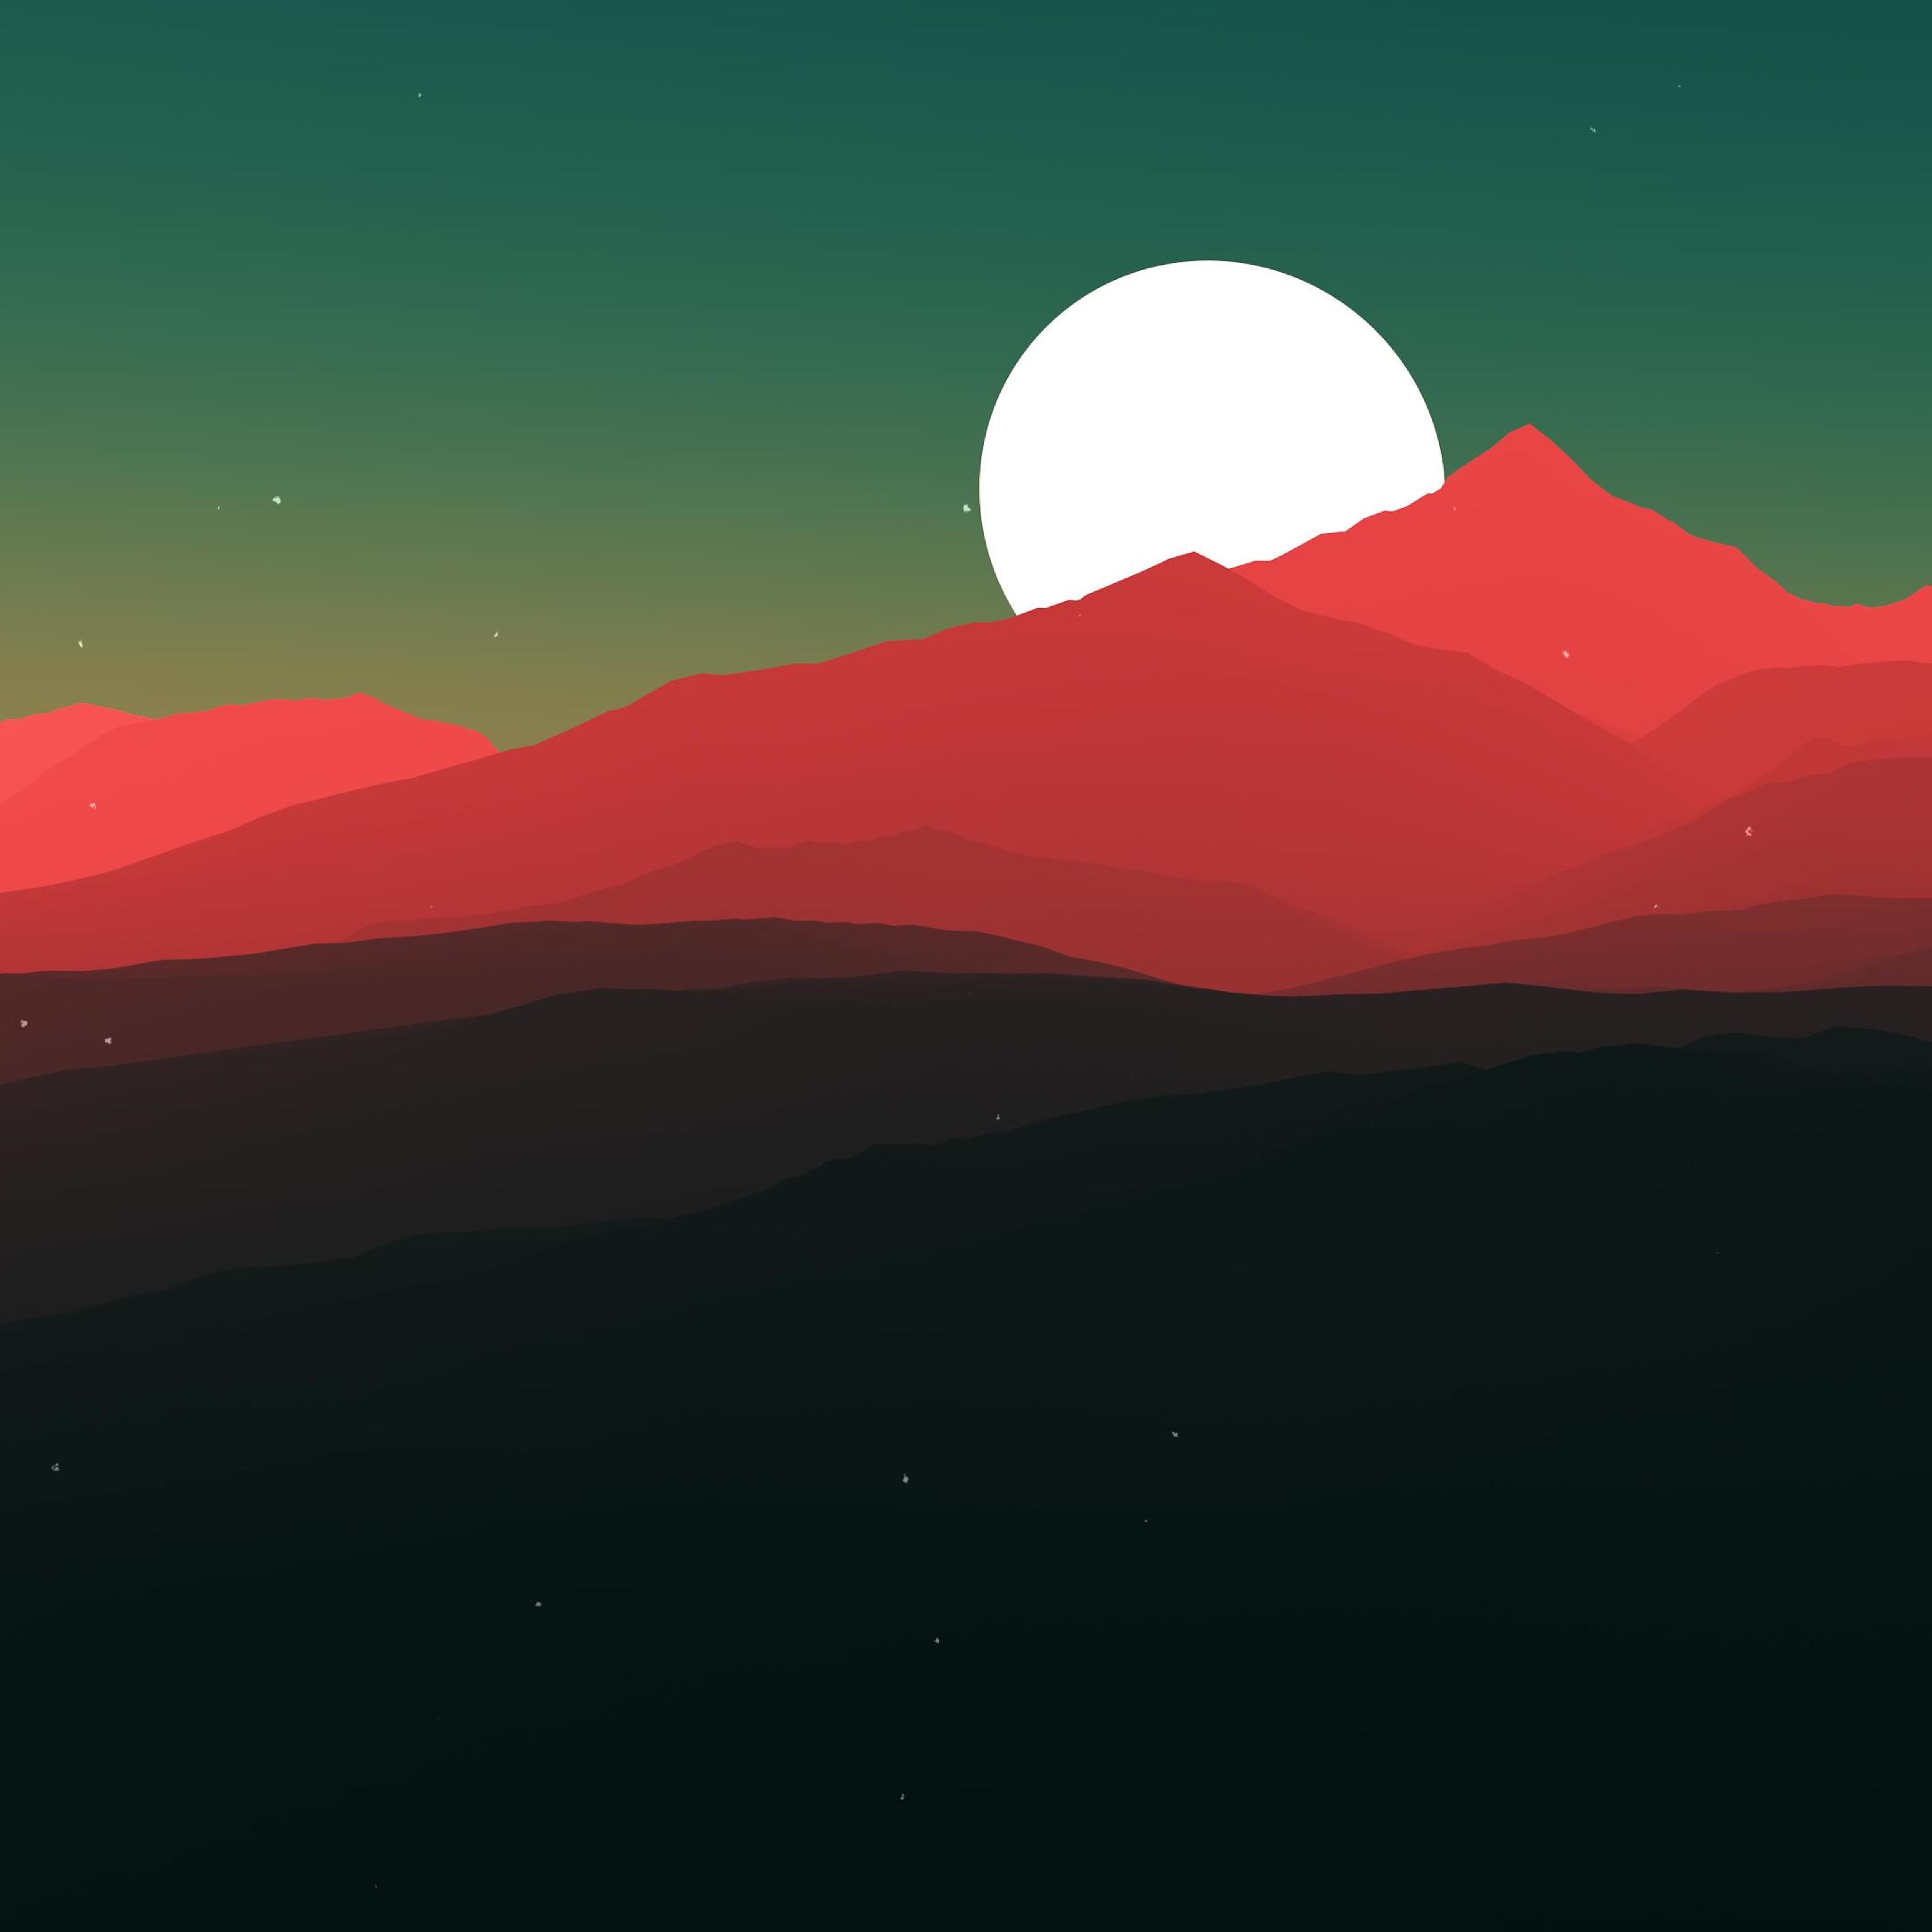 carta da parati minimalista per ipad,cielo,rosso,montagna,collina,luna piena